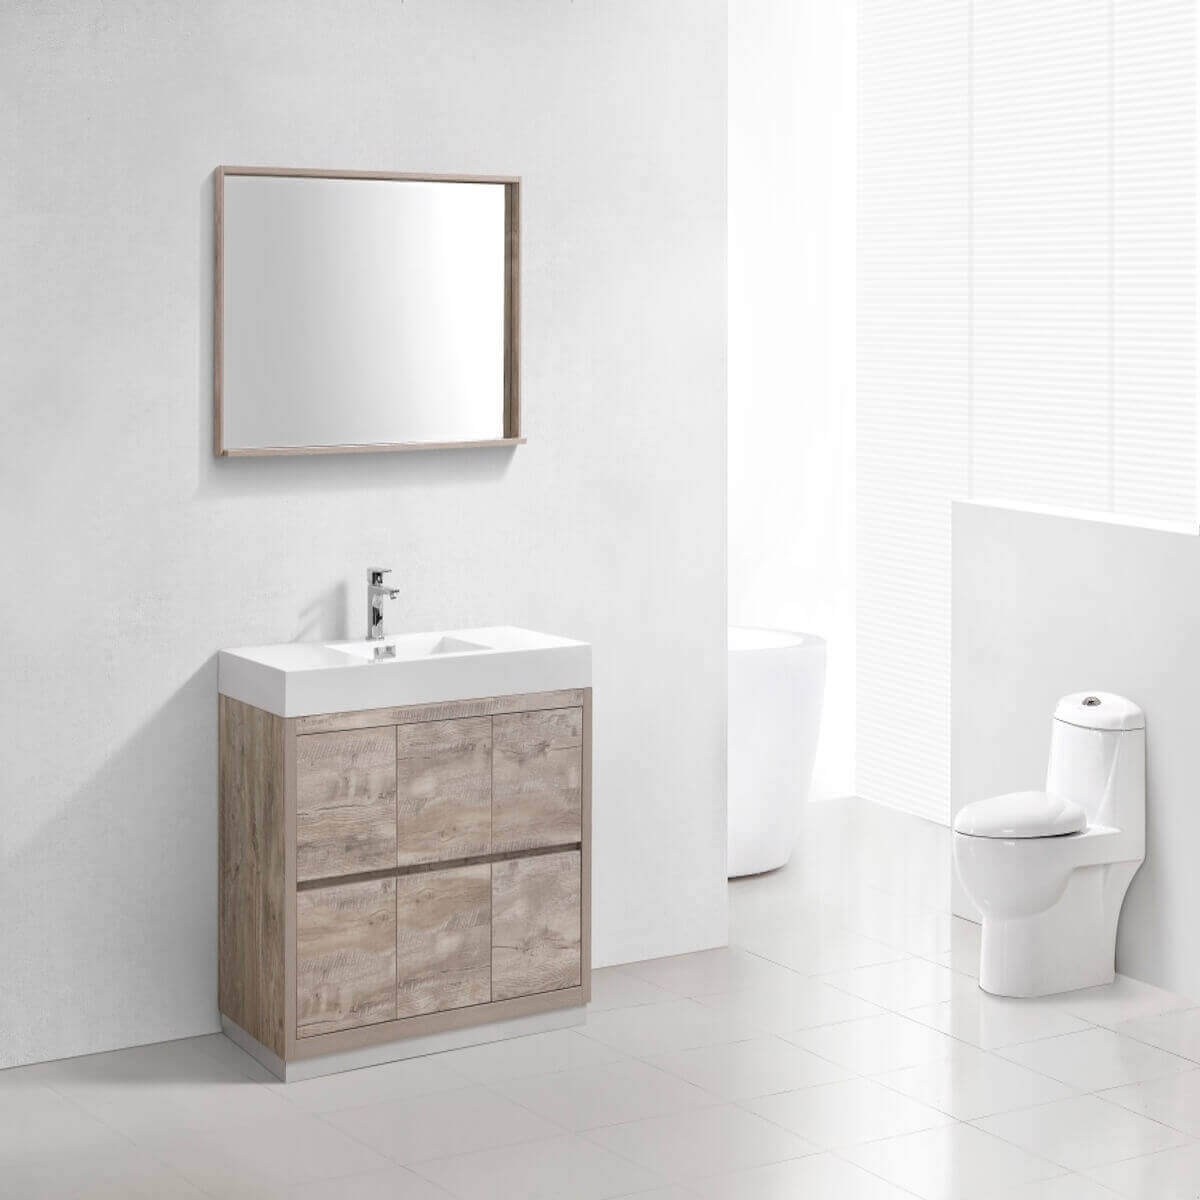 KubeBath Bliss 48" Nature Wood Freestanding Single Vanity FMB48-NW in Bathroom #finish_nature wood